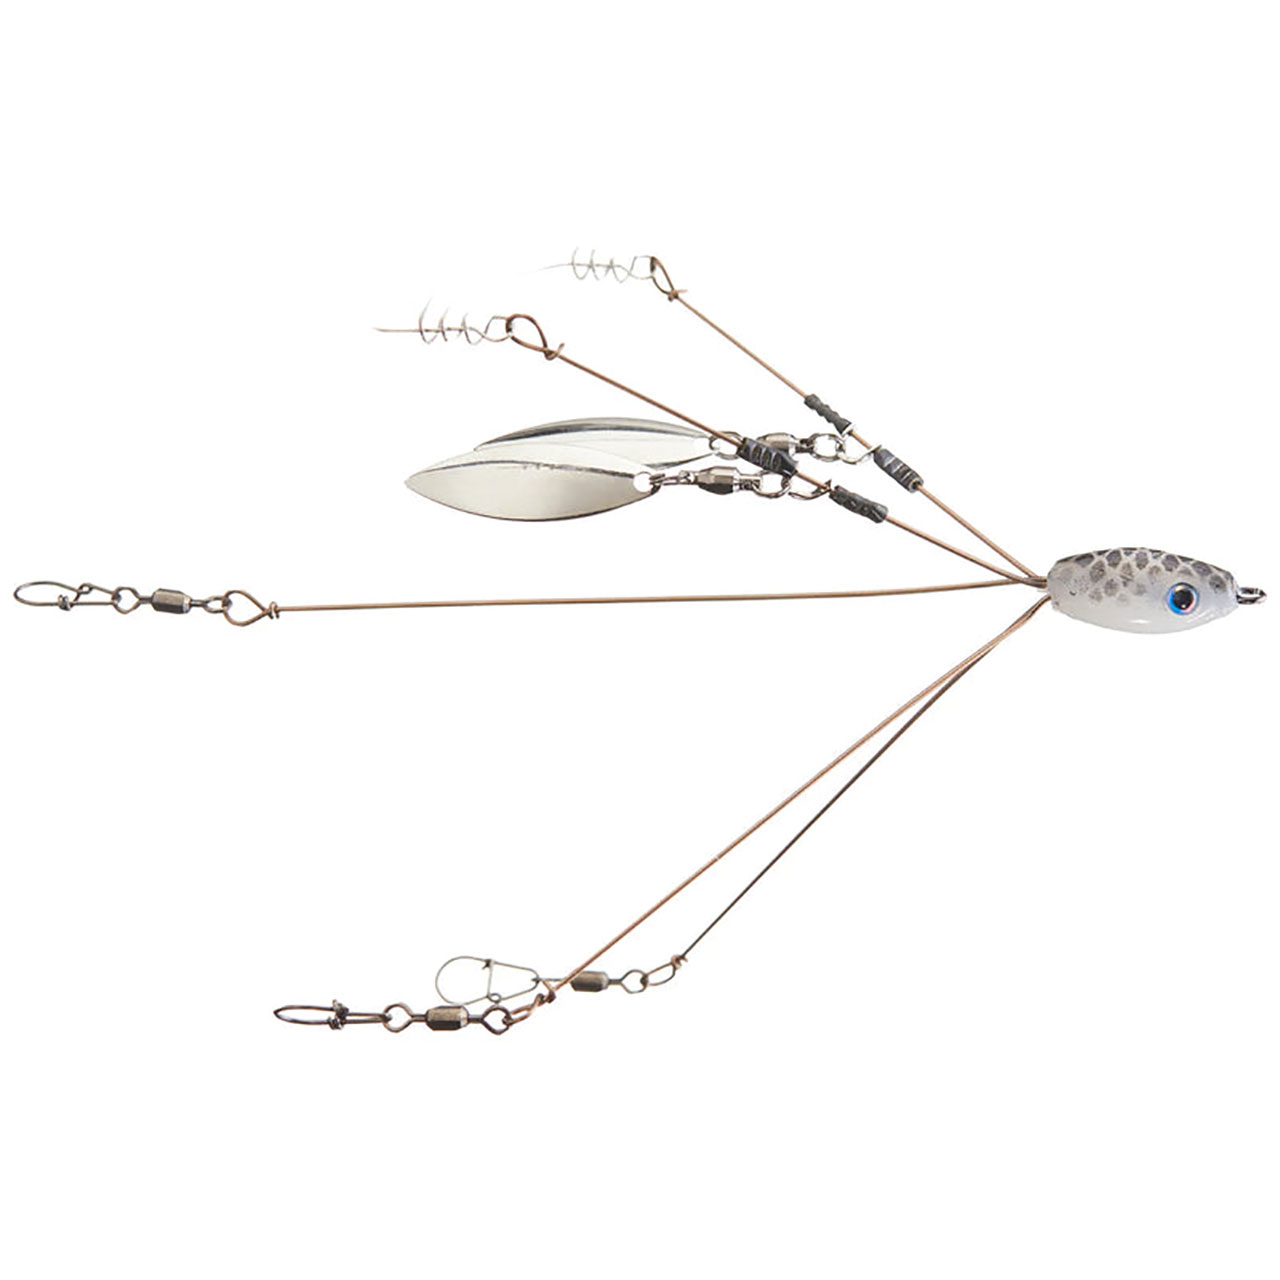 Alabama Rig For Bass Fishing Lures Swim Bait Umbrella Ultralight